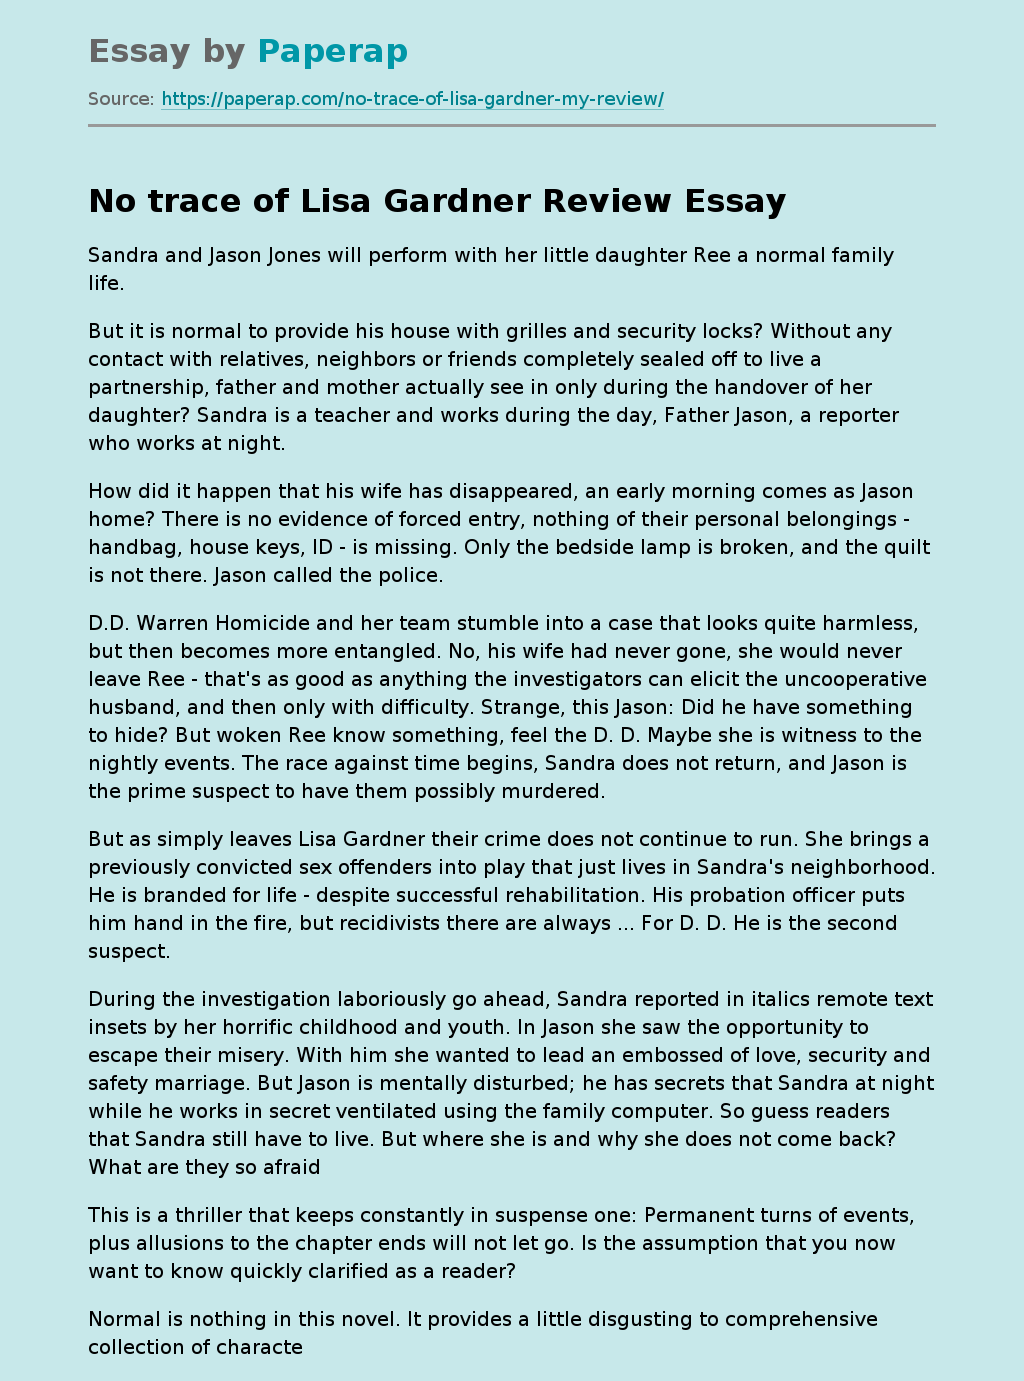 Book "No trace" of Lisa Gardner